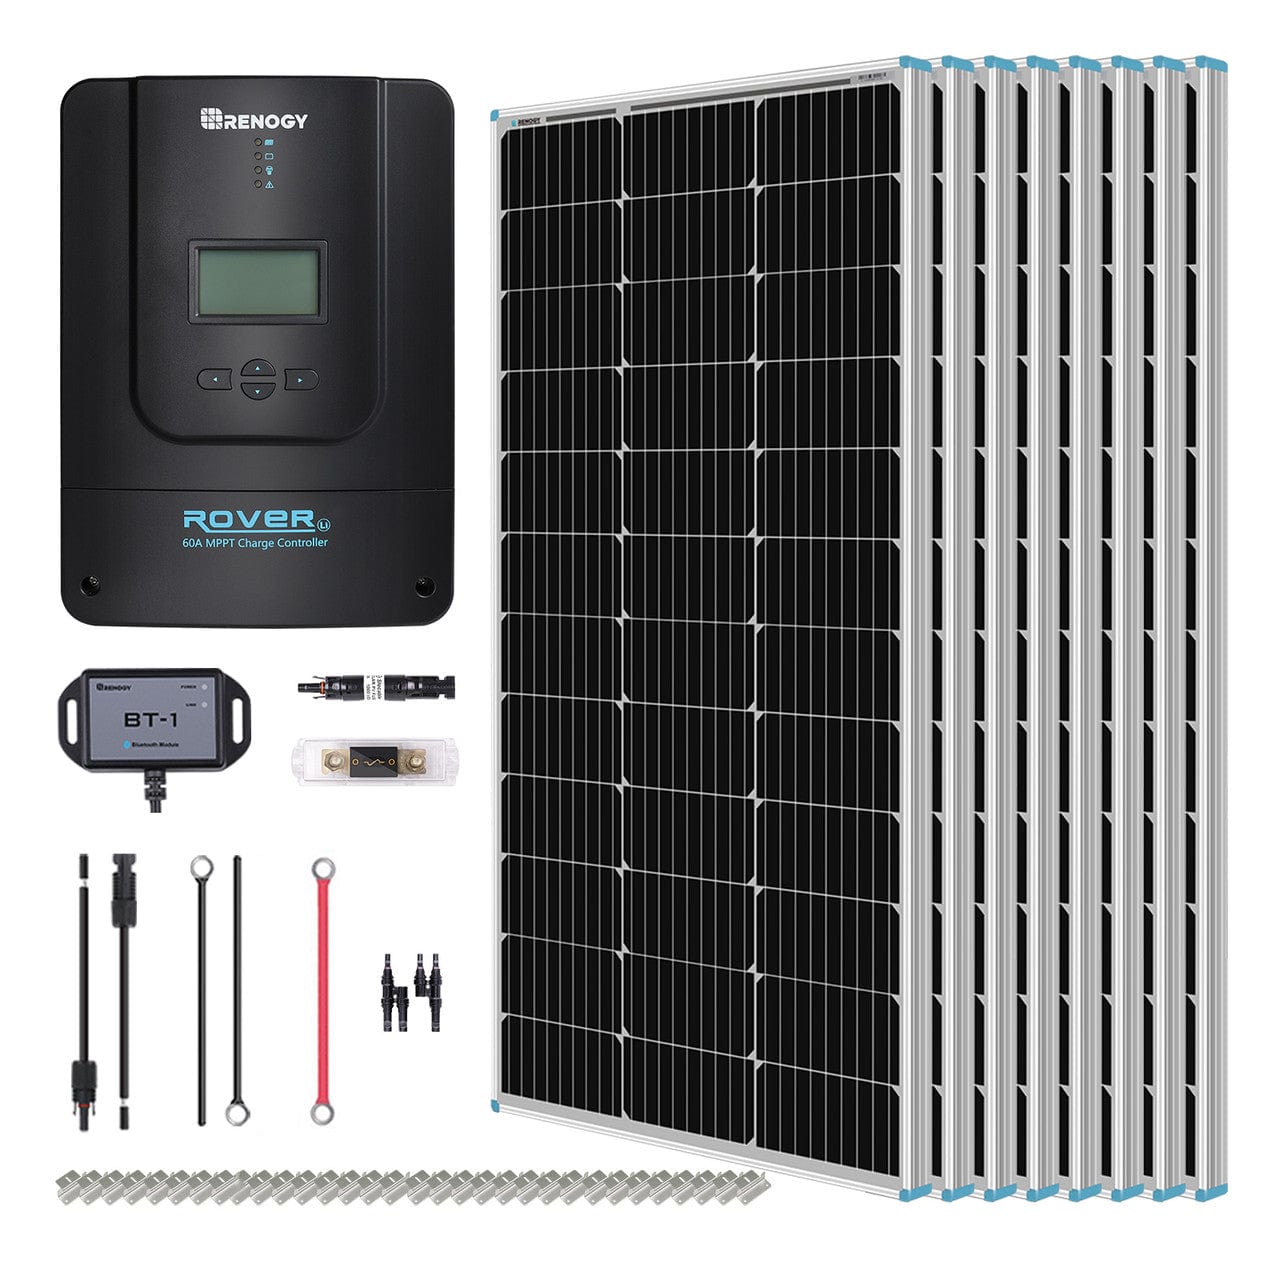 Renogy 800W 12V/24V Monocrystalline Solar Premium Kit w/Rover 60A Charger Controller Renogy None Solar Power Kits